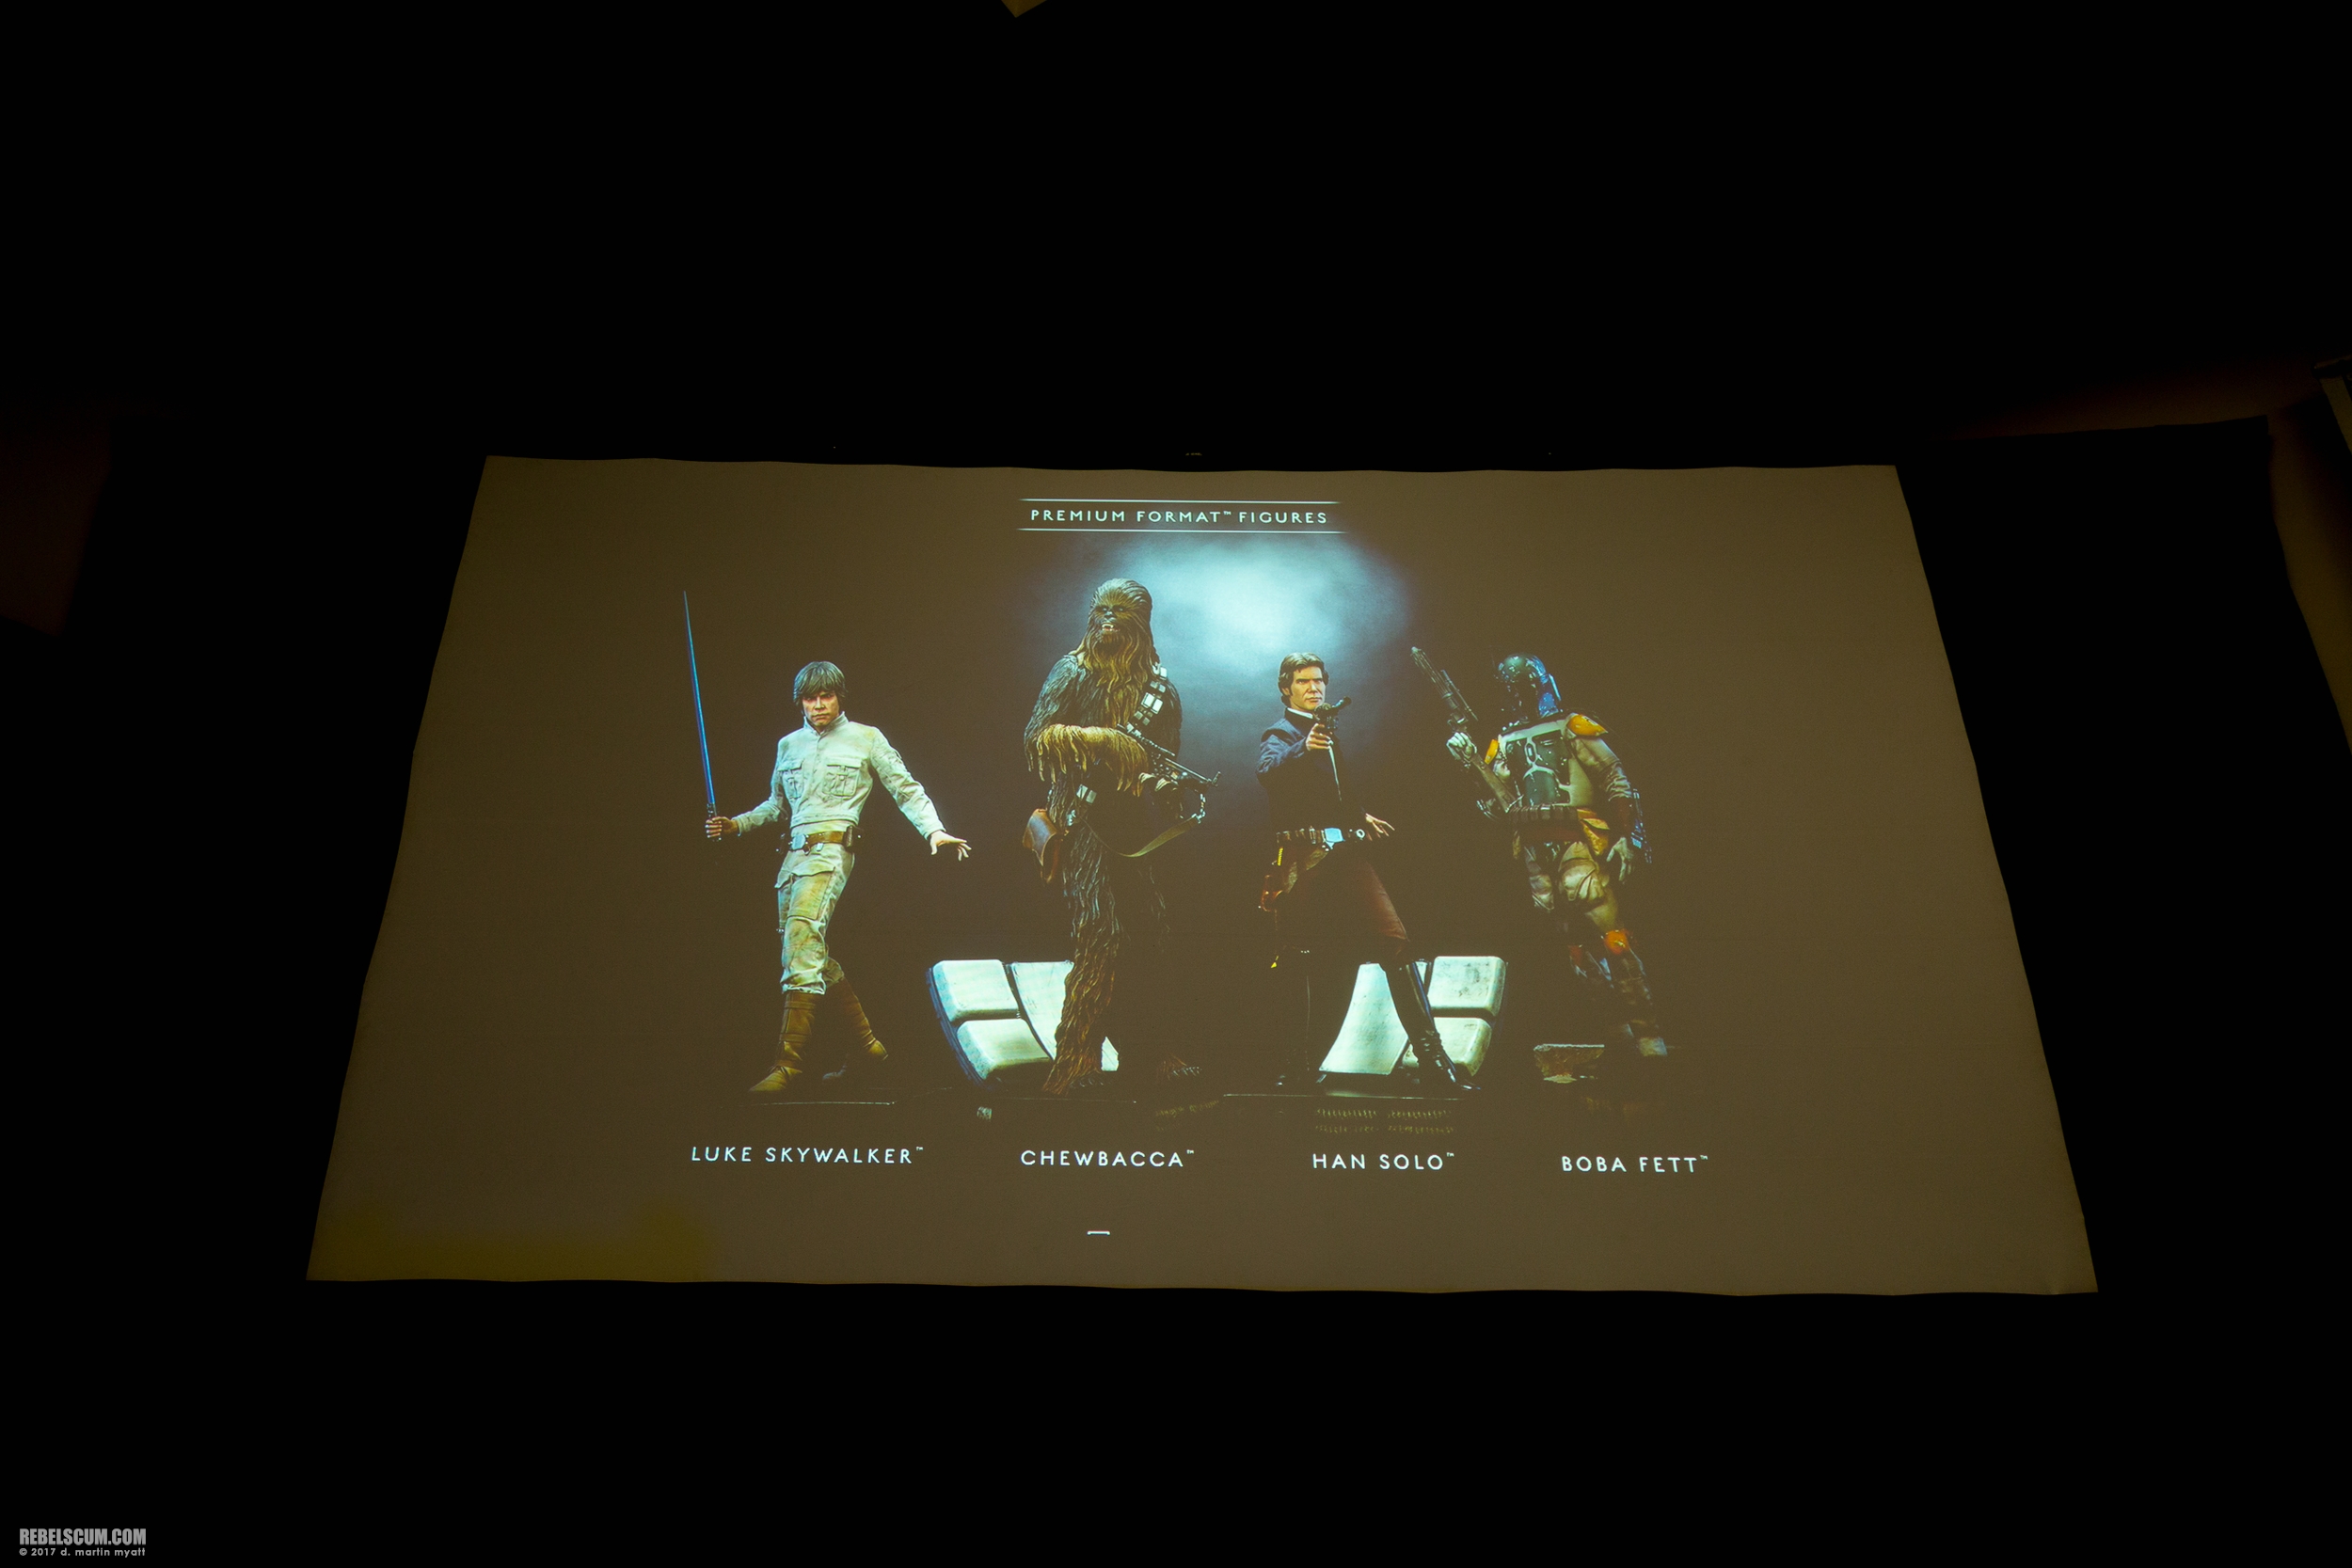 San-Diego-Comic-Con-2017-Star-Wars-Collectibles-Update-021.jpg